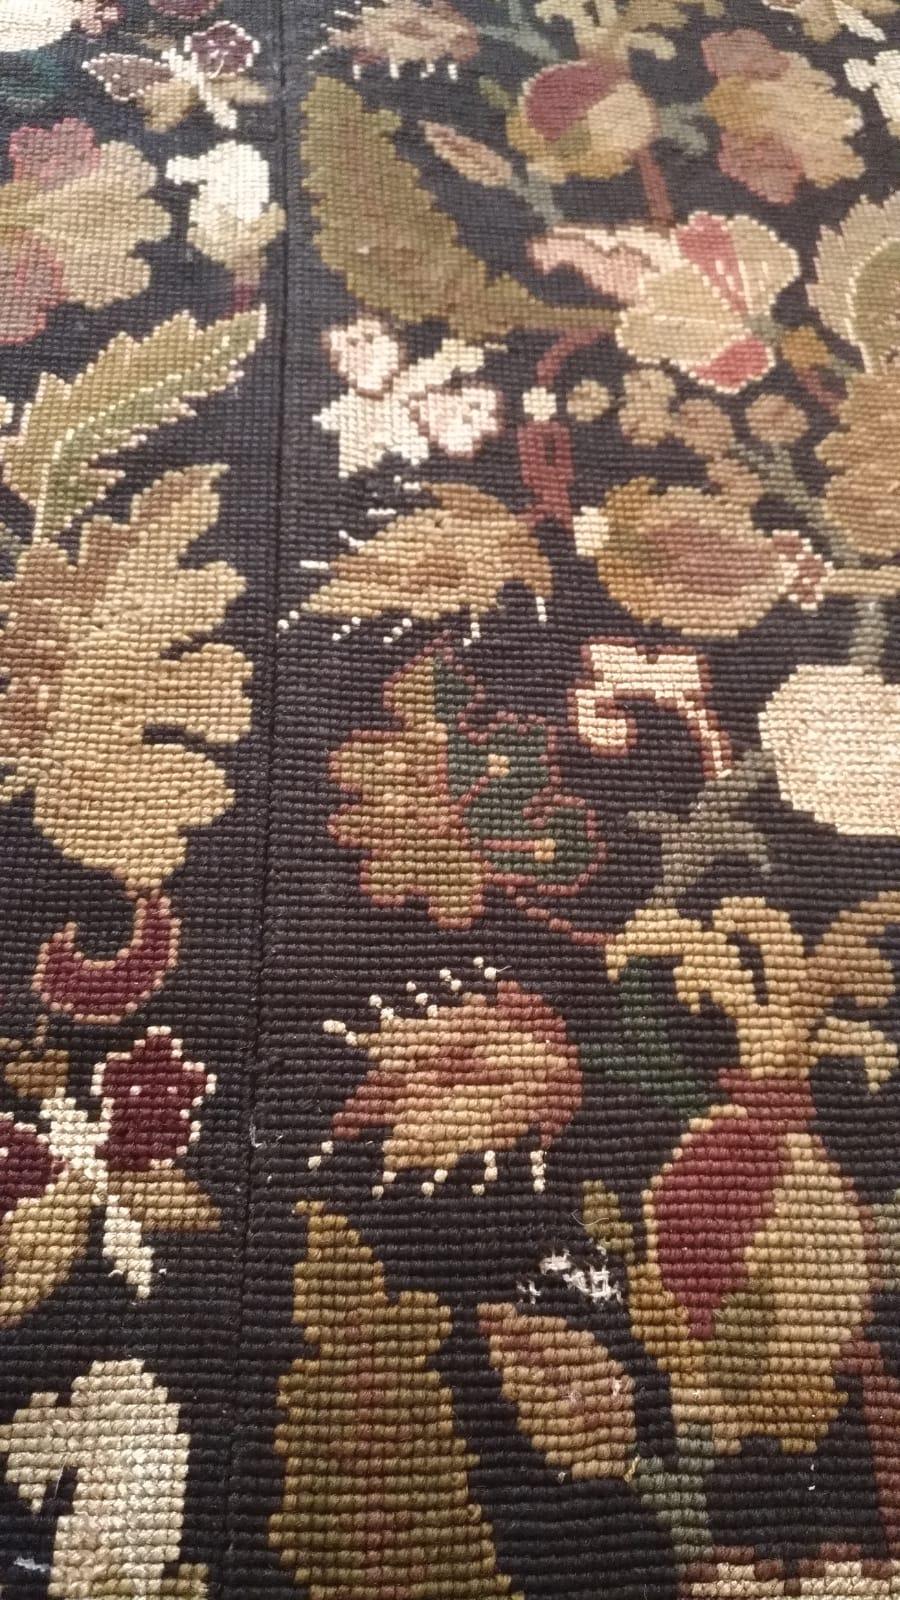 928 - 19th century needle point carpet.
 